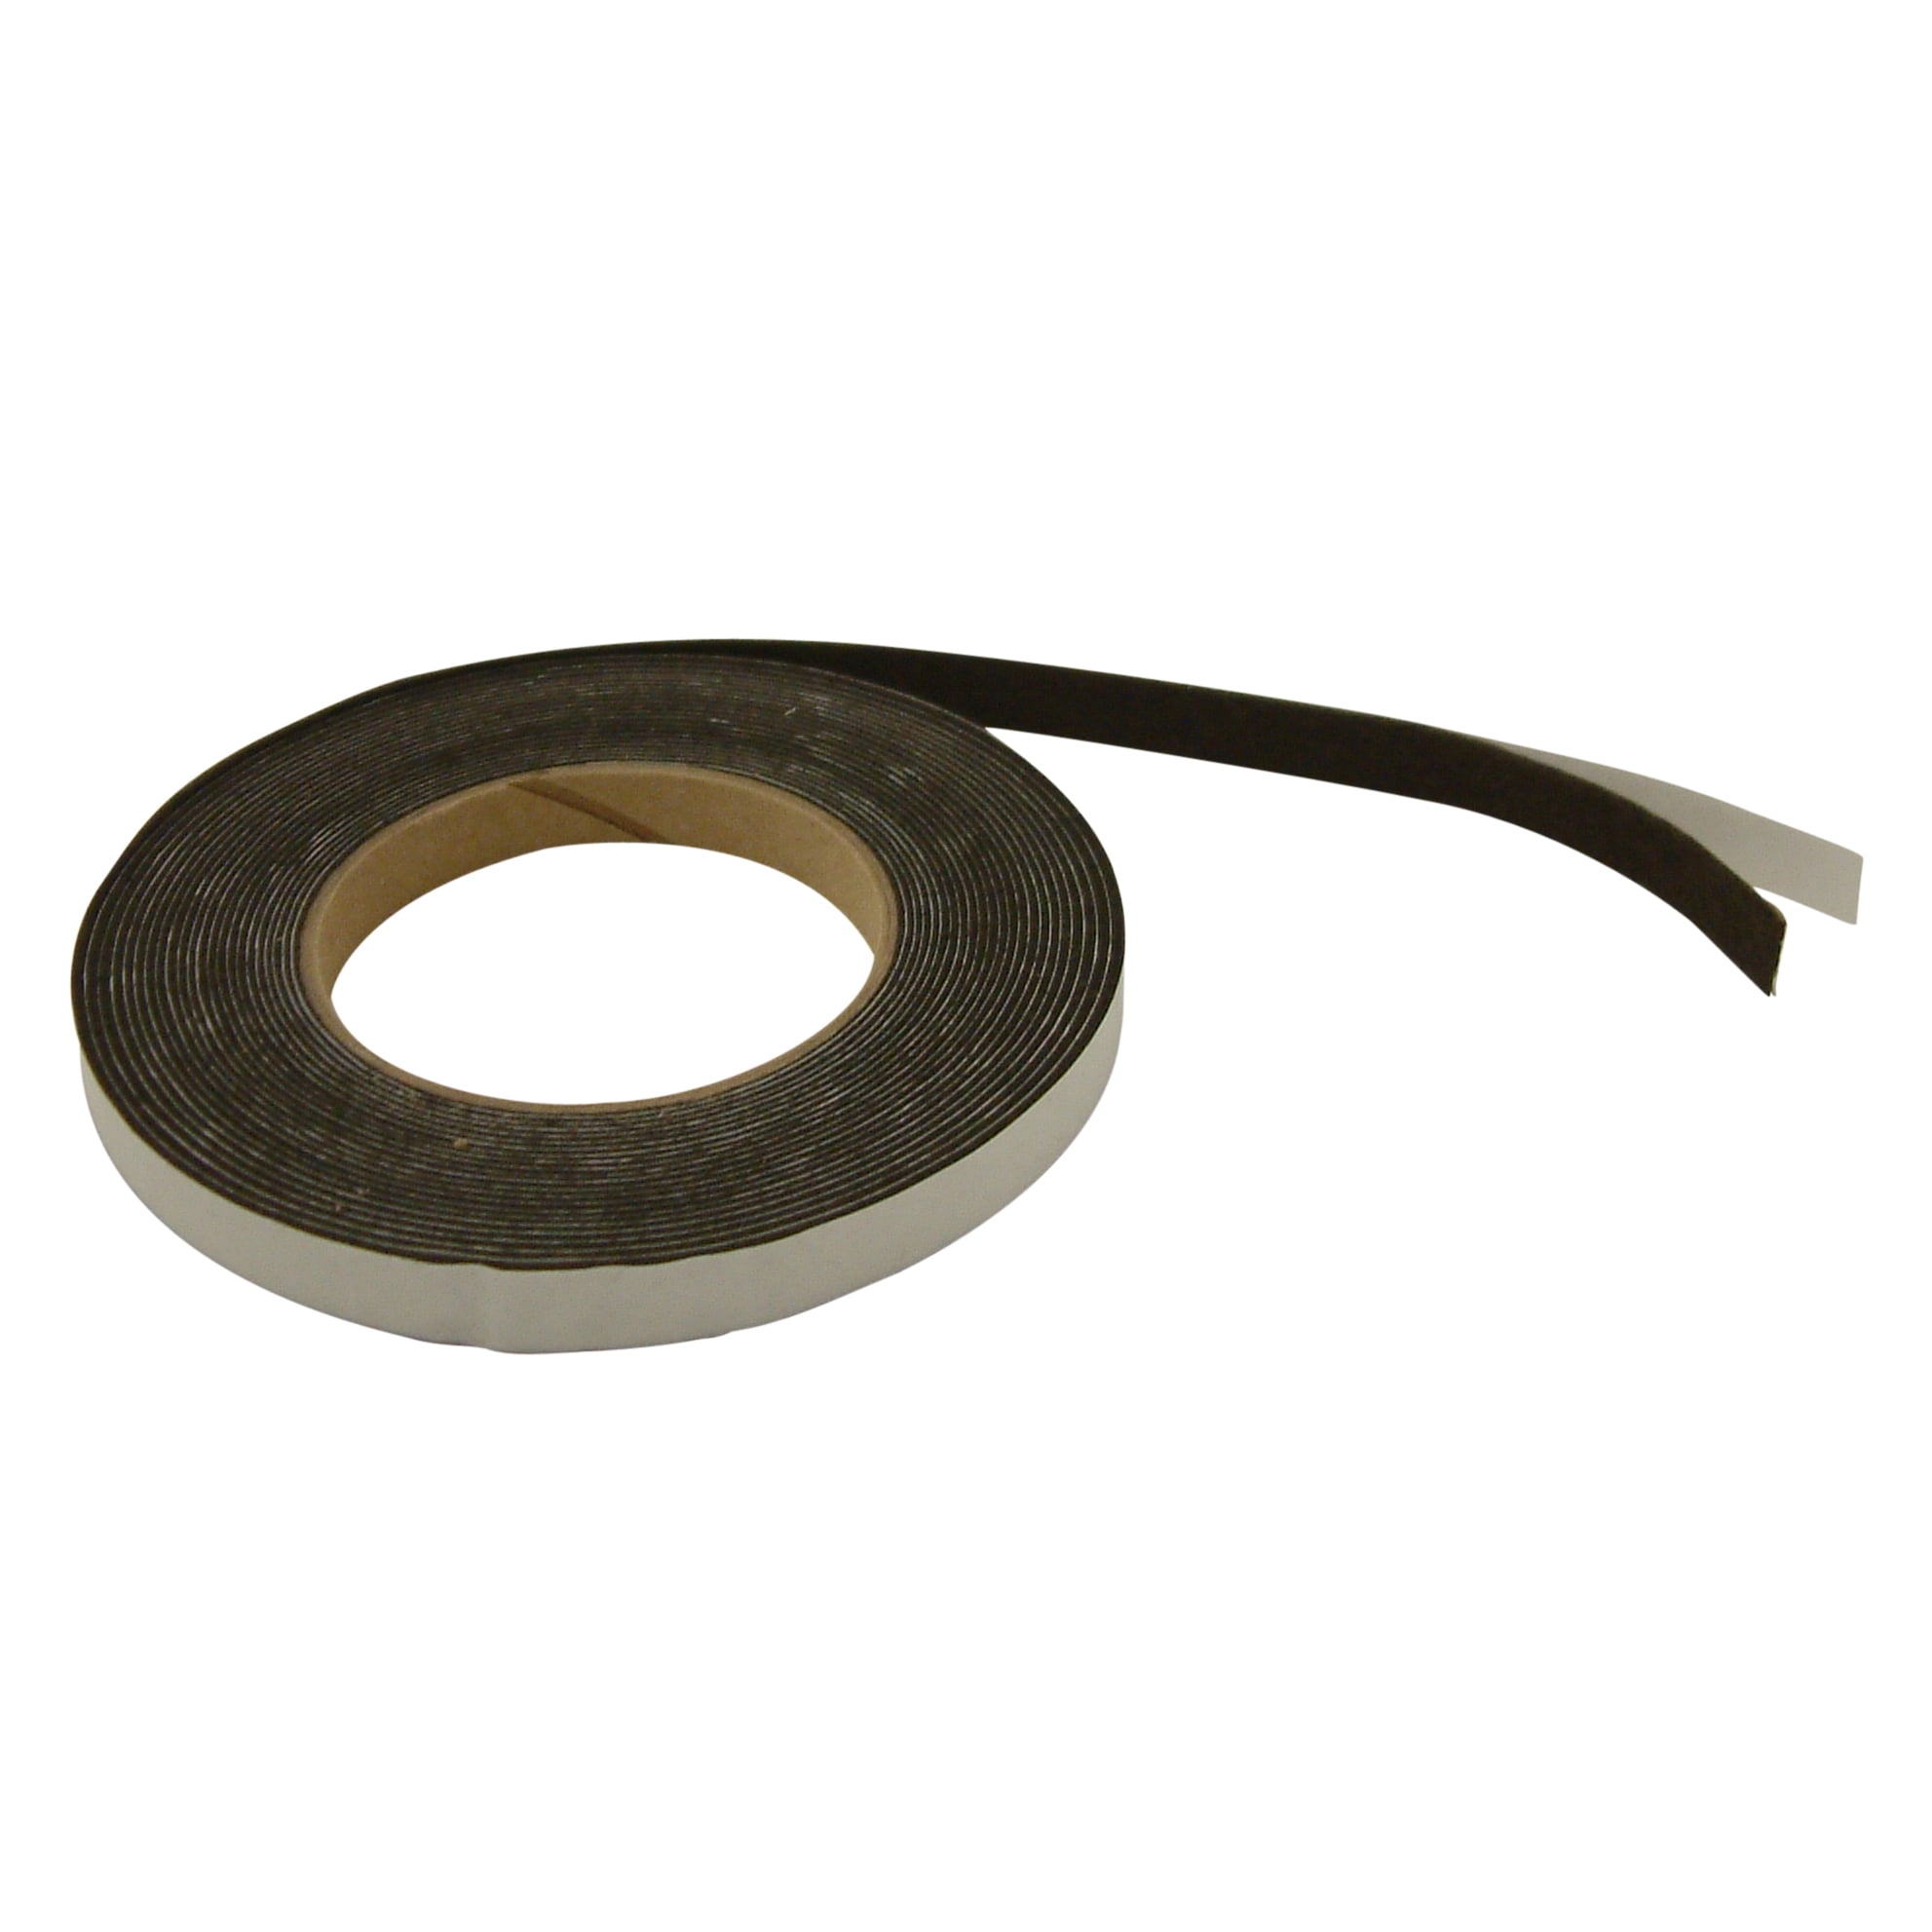 JVCC Acrylic Craft Felt Tape [1mm thick felt] (ACF-06): 3/4 in. x 25 ft.  (Dark Brown)